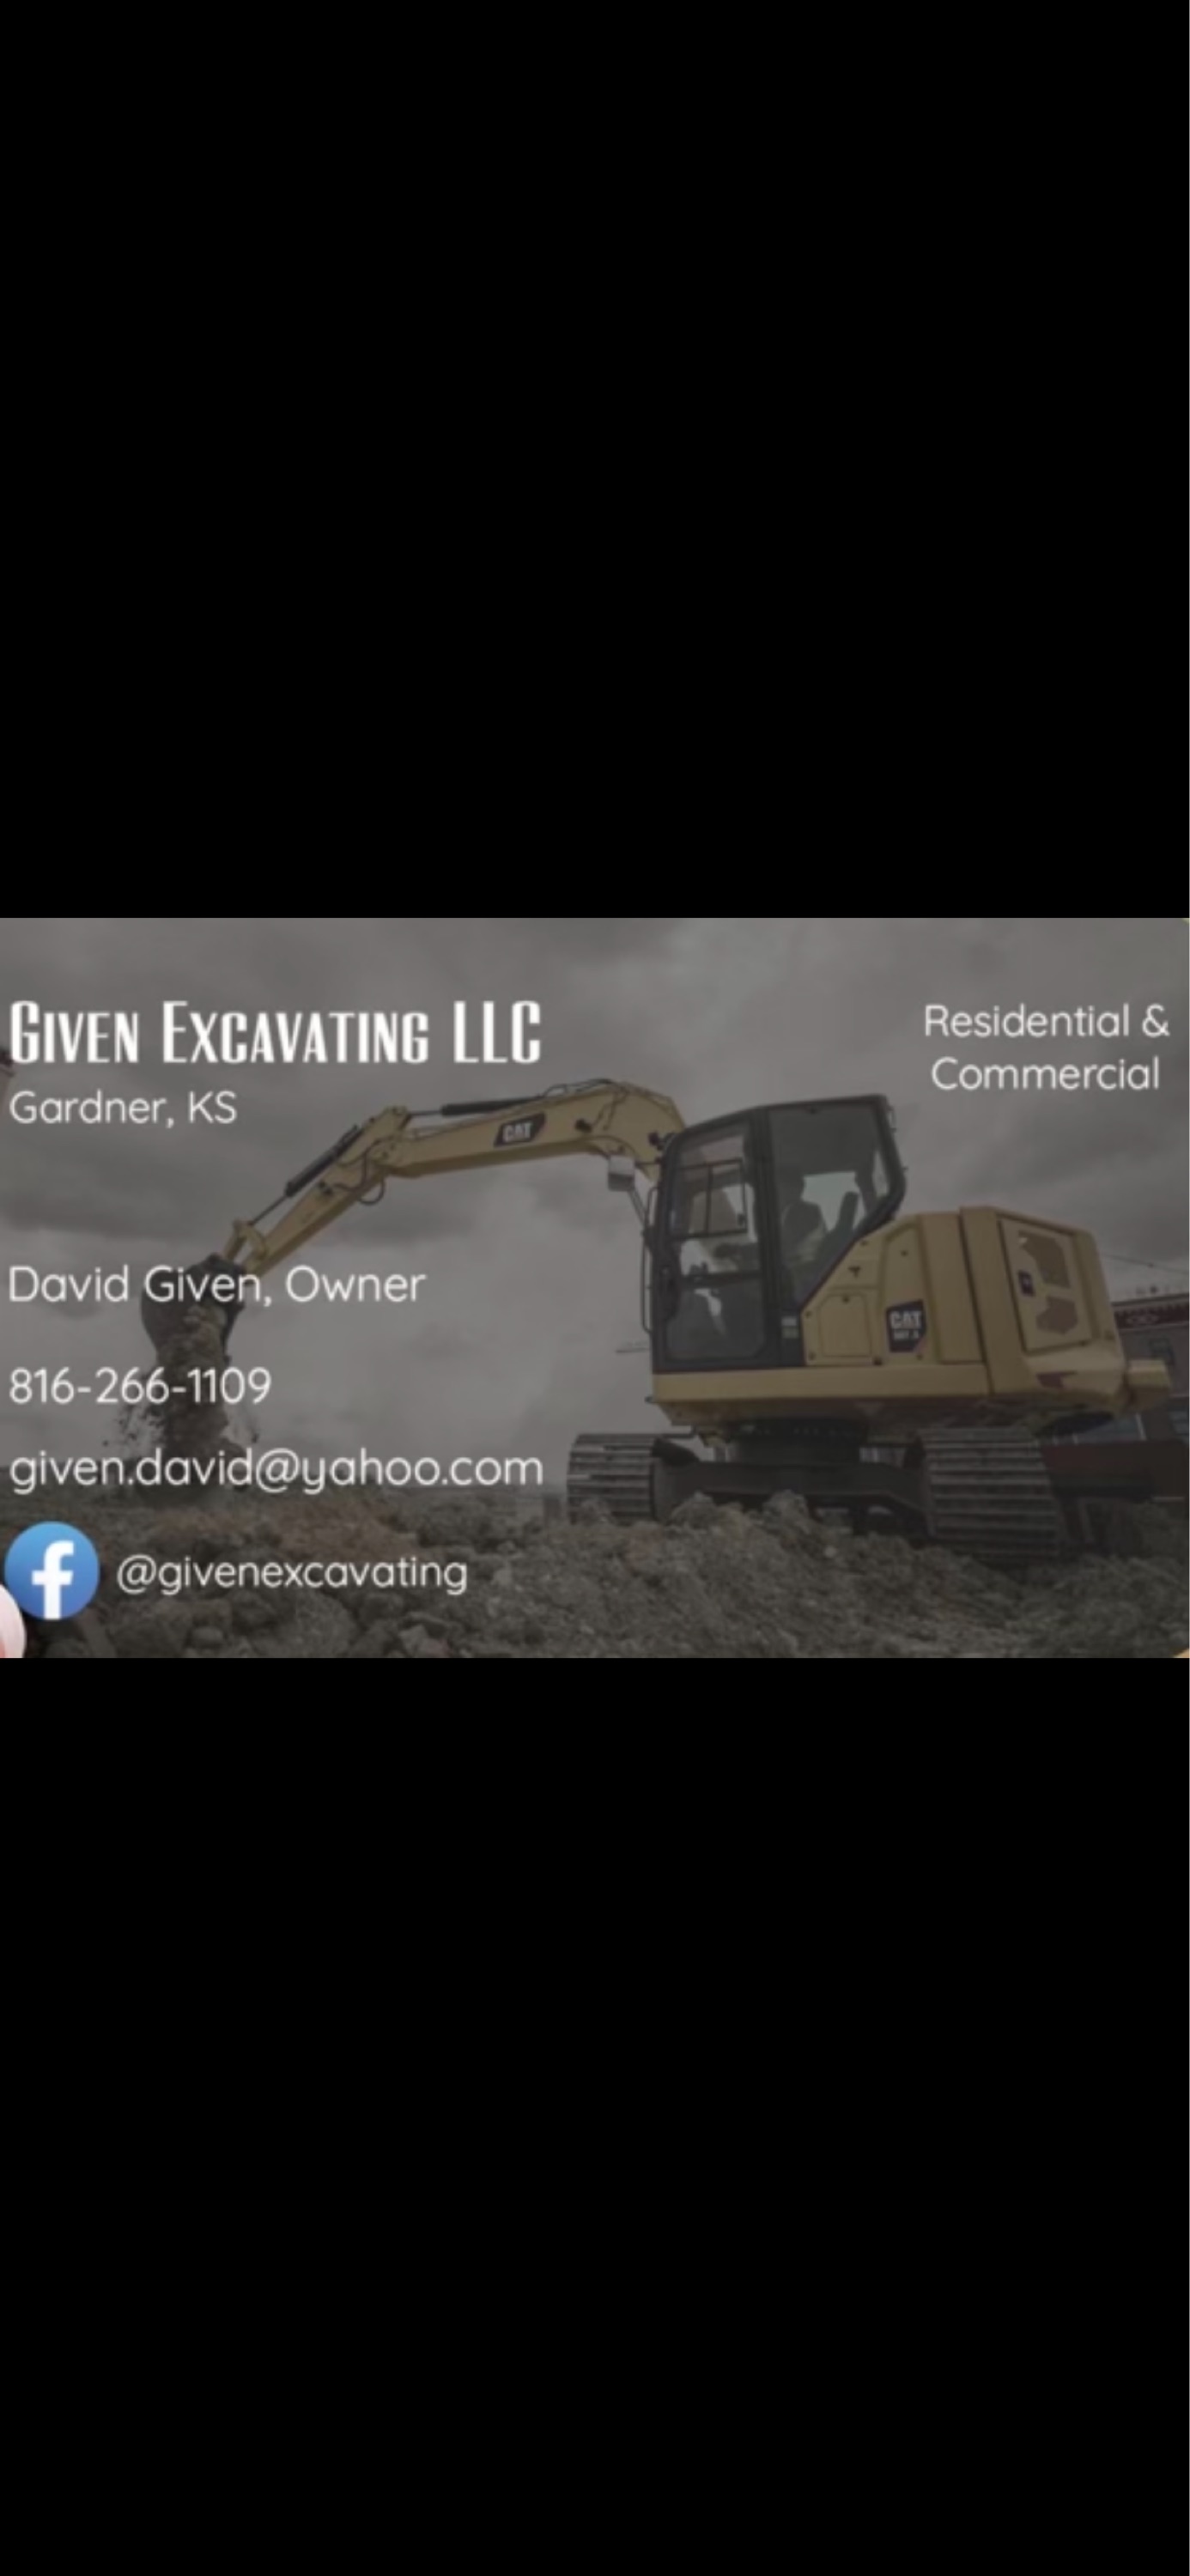 Given Excavating, LLC Logo